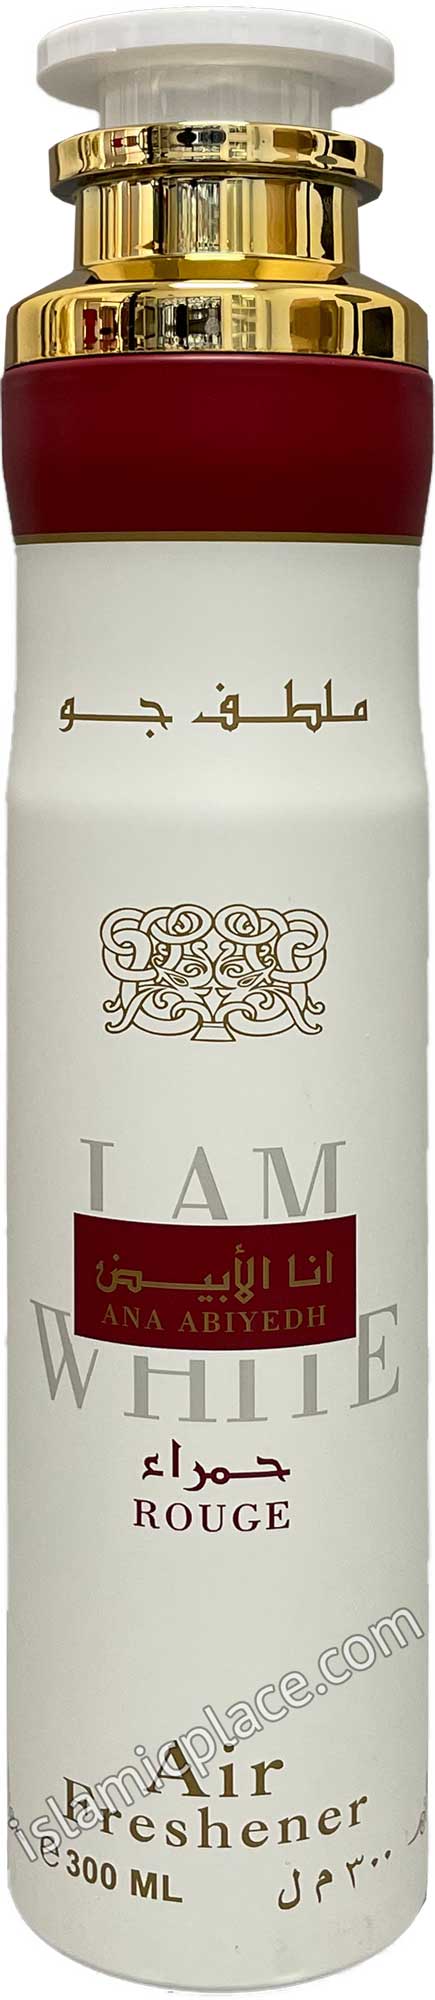 Ana Abiyedh - I am White - Rouge - Air Freshener Can (300 ml) by Lattafa